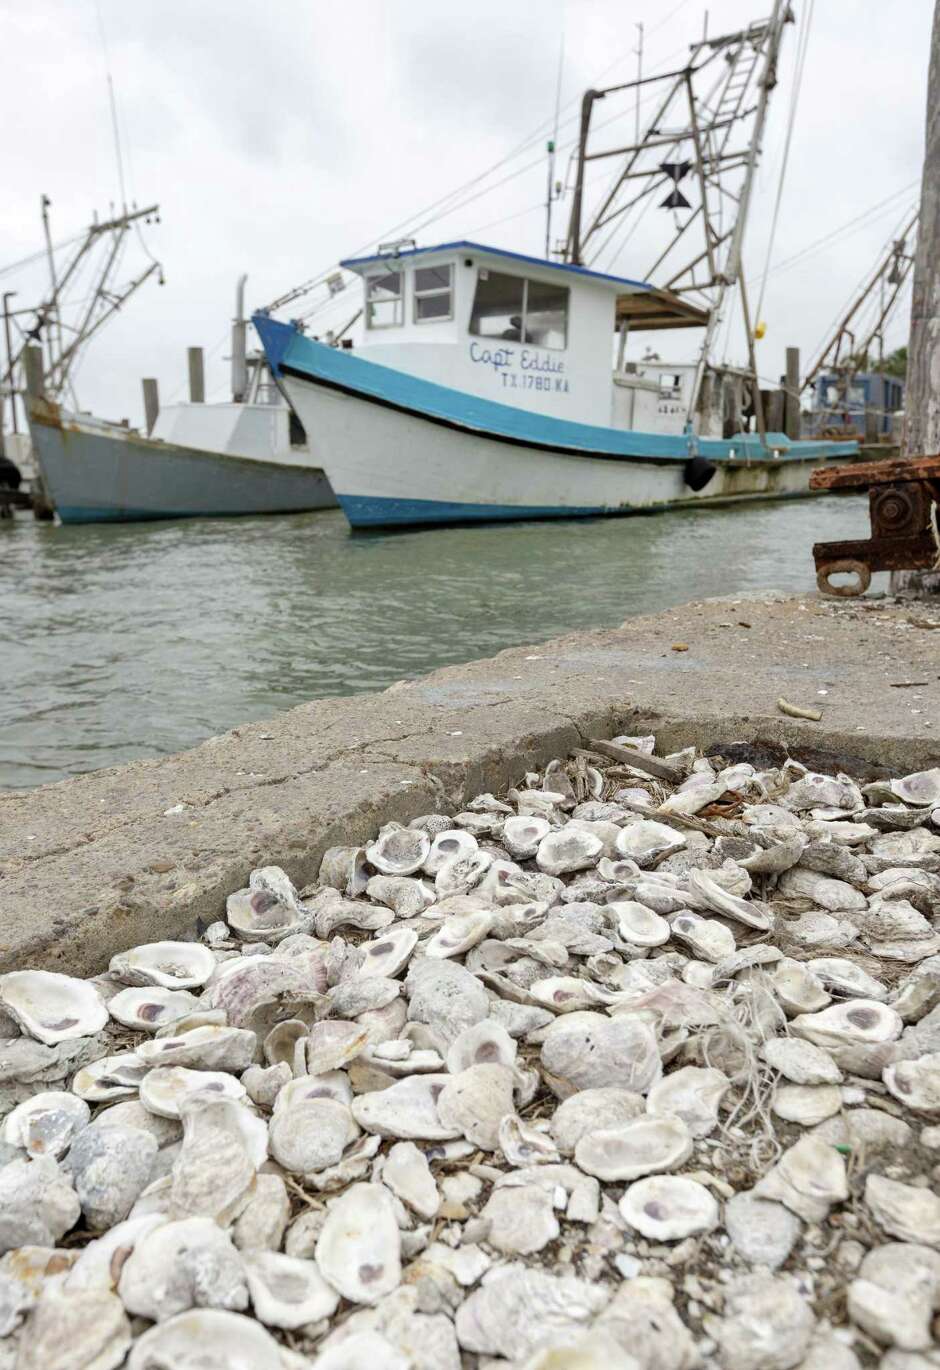 New Texas law allows oyster farming